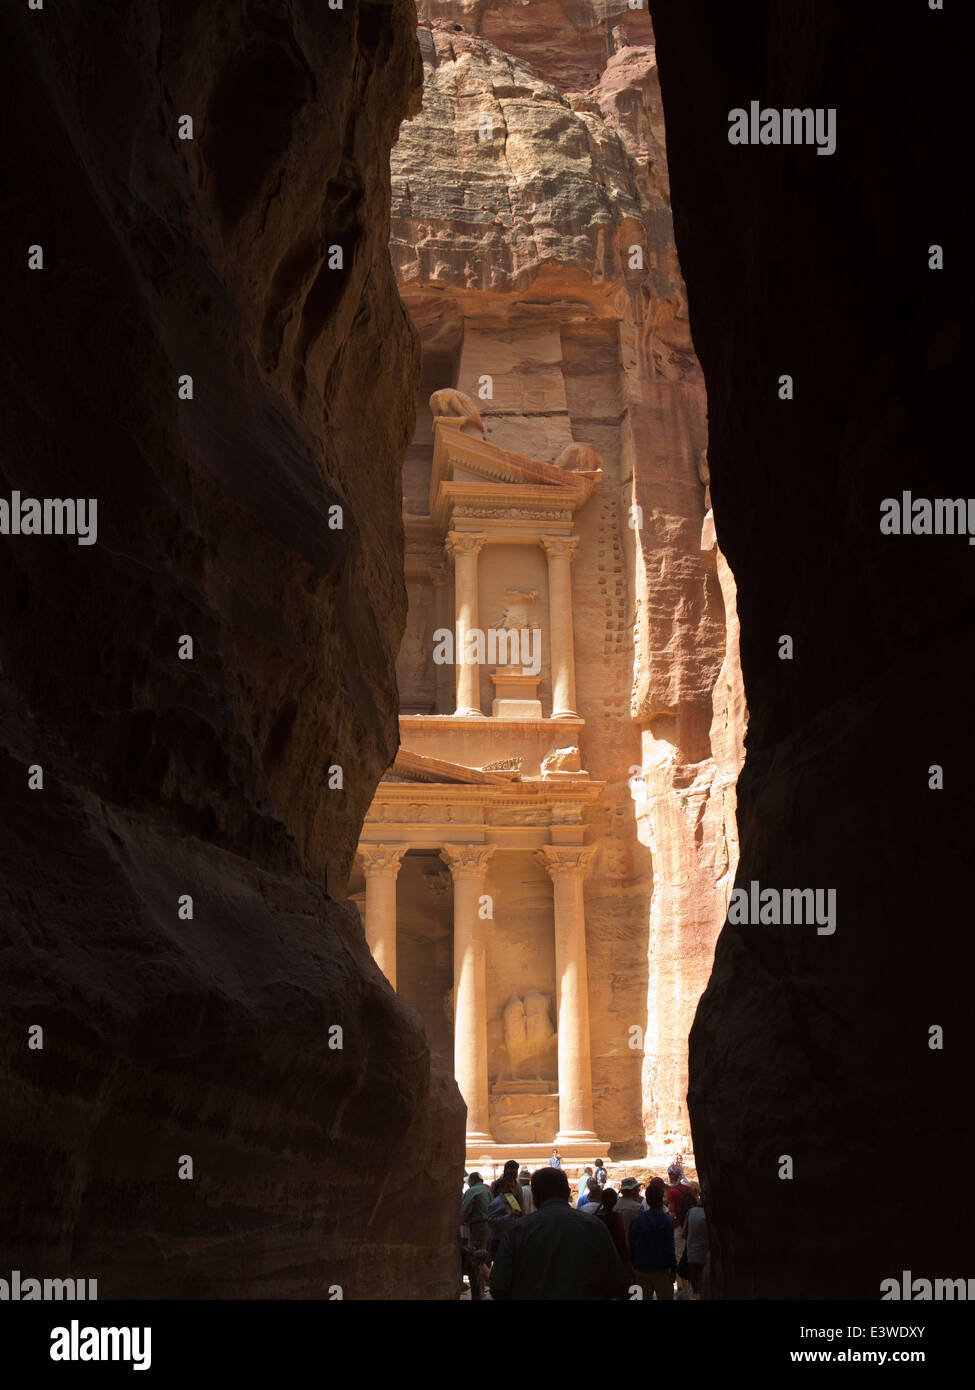 Jordan, Arabah, Petra, first view of the Treasury, Khazneh Al Firaun from Al-Siq entrance canyon to site Stock Photo